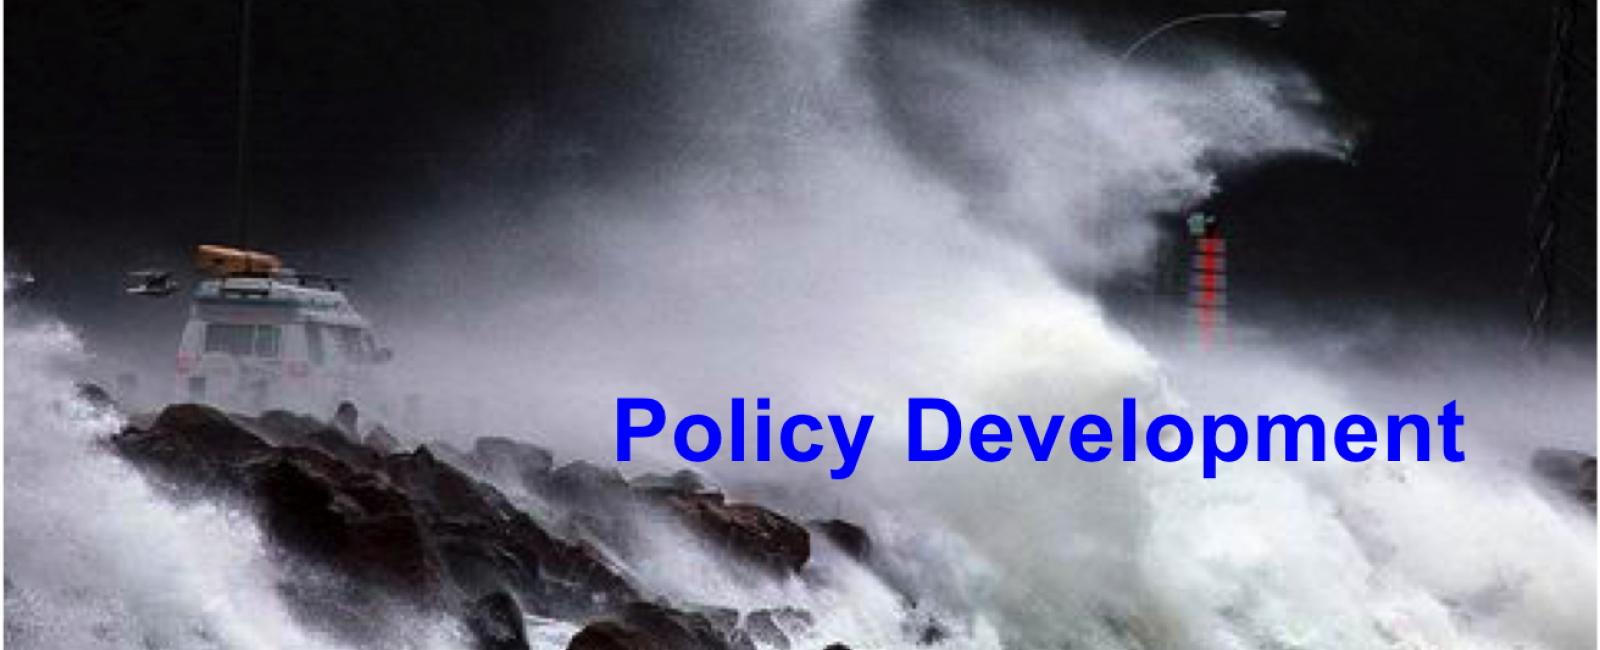 Policy Development - huge waves